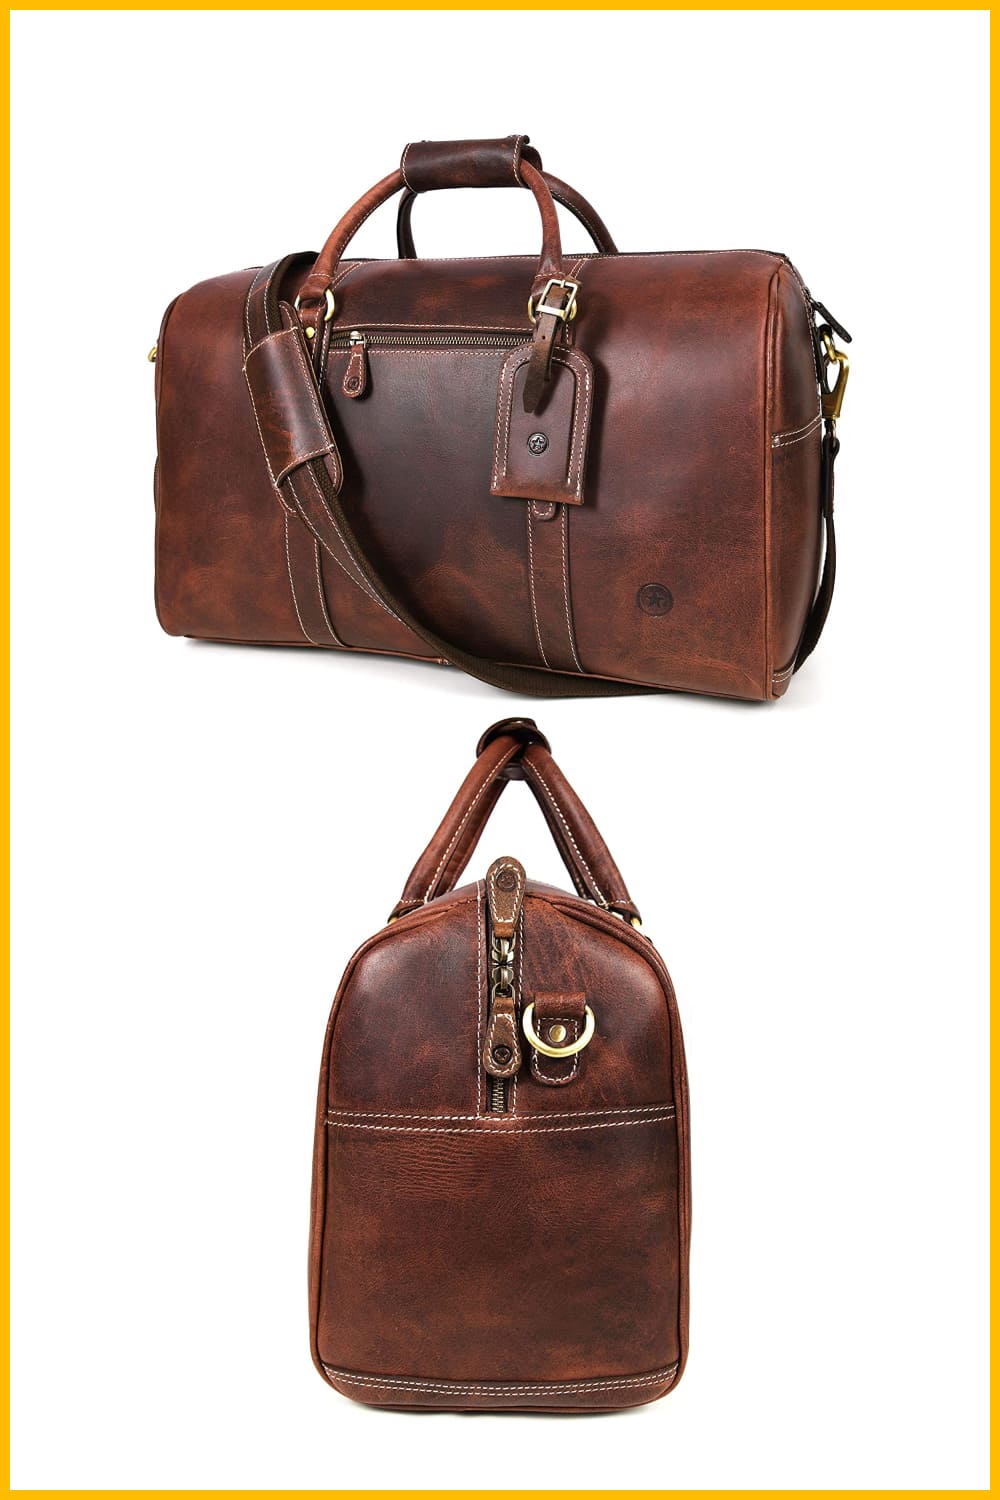 Brown Leather Travel Duffel Bag.